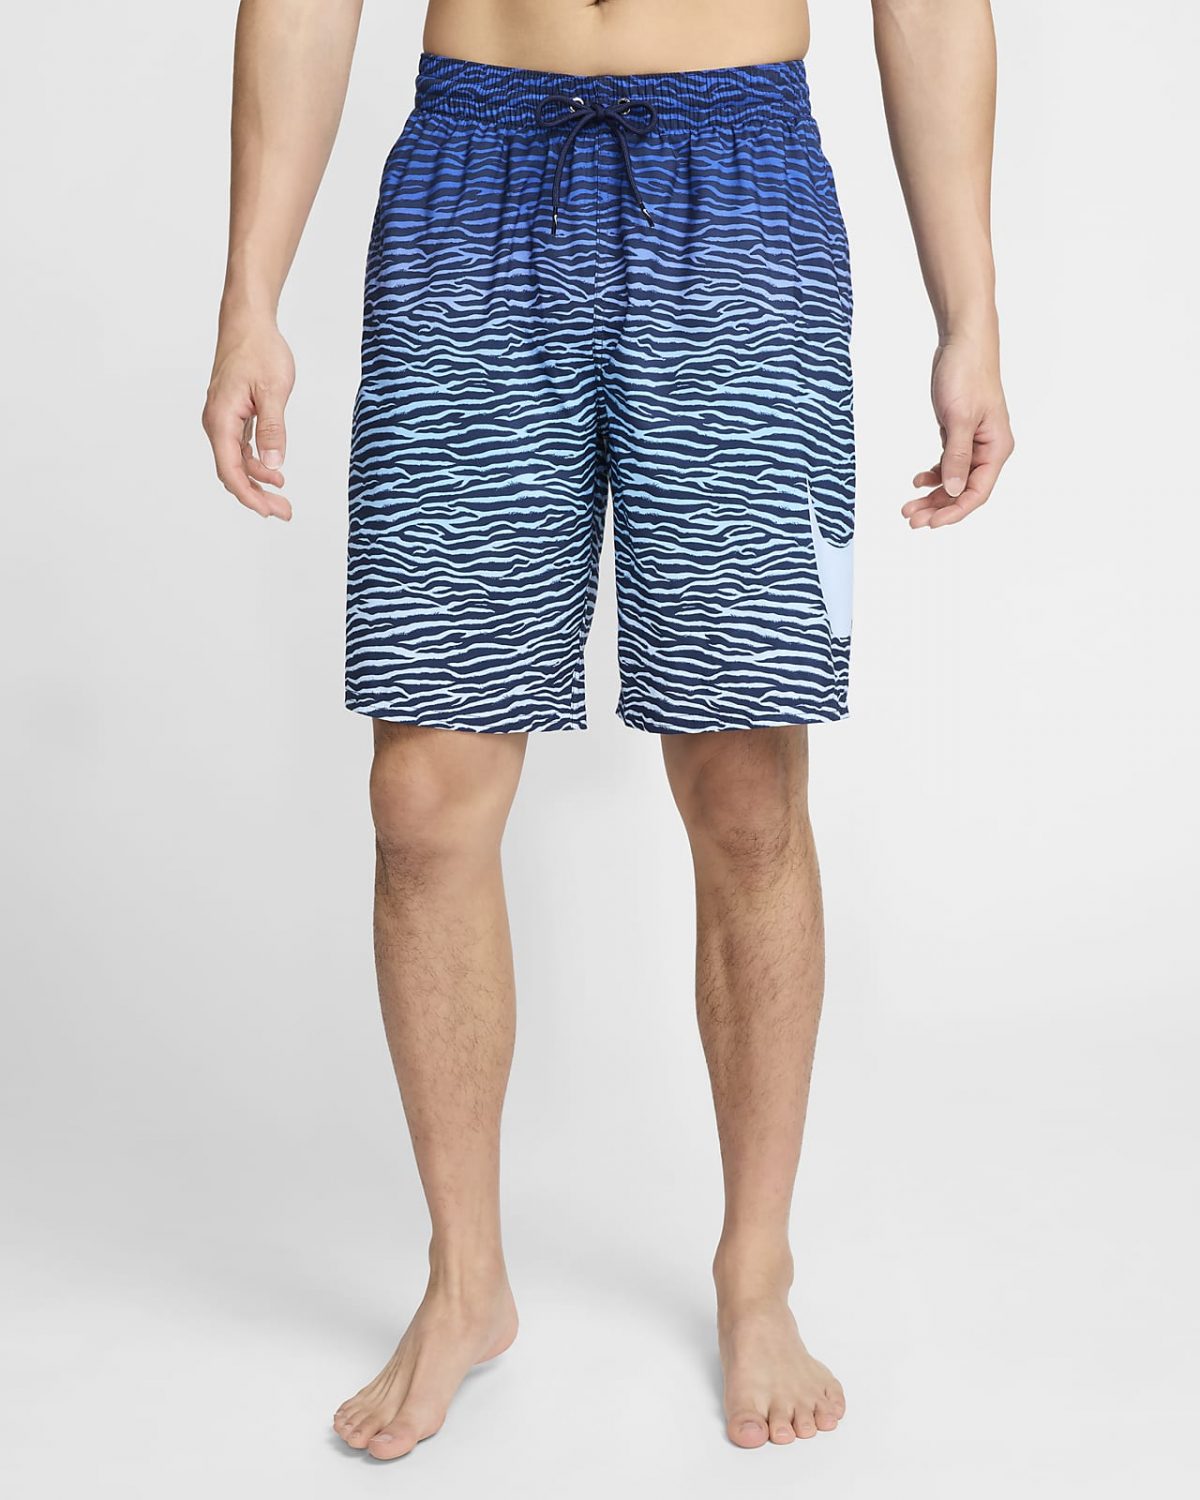 Мужские шорты Nike Swim фото